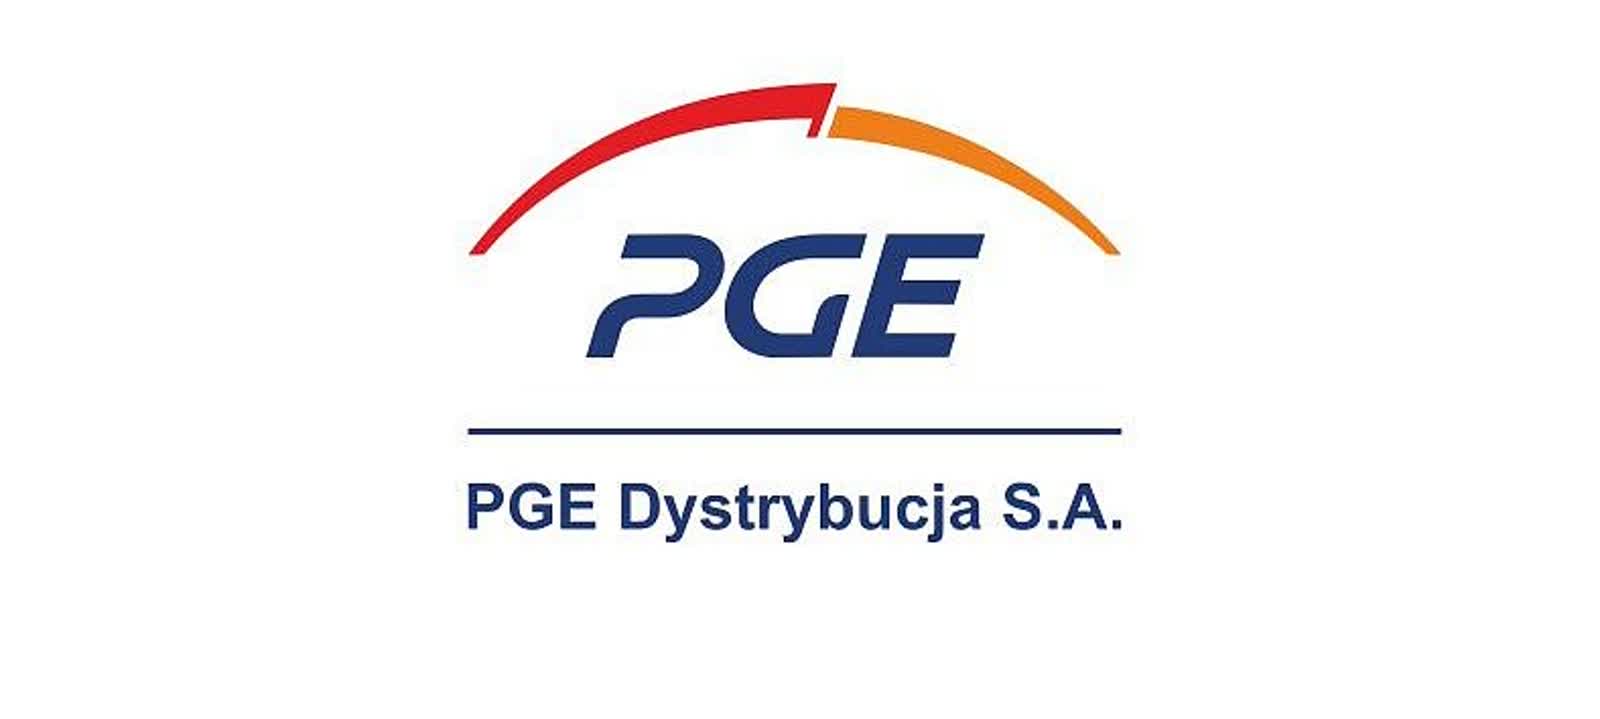 PGE2.jpg